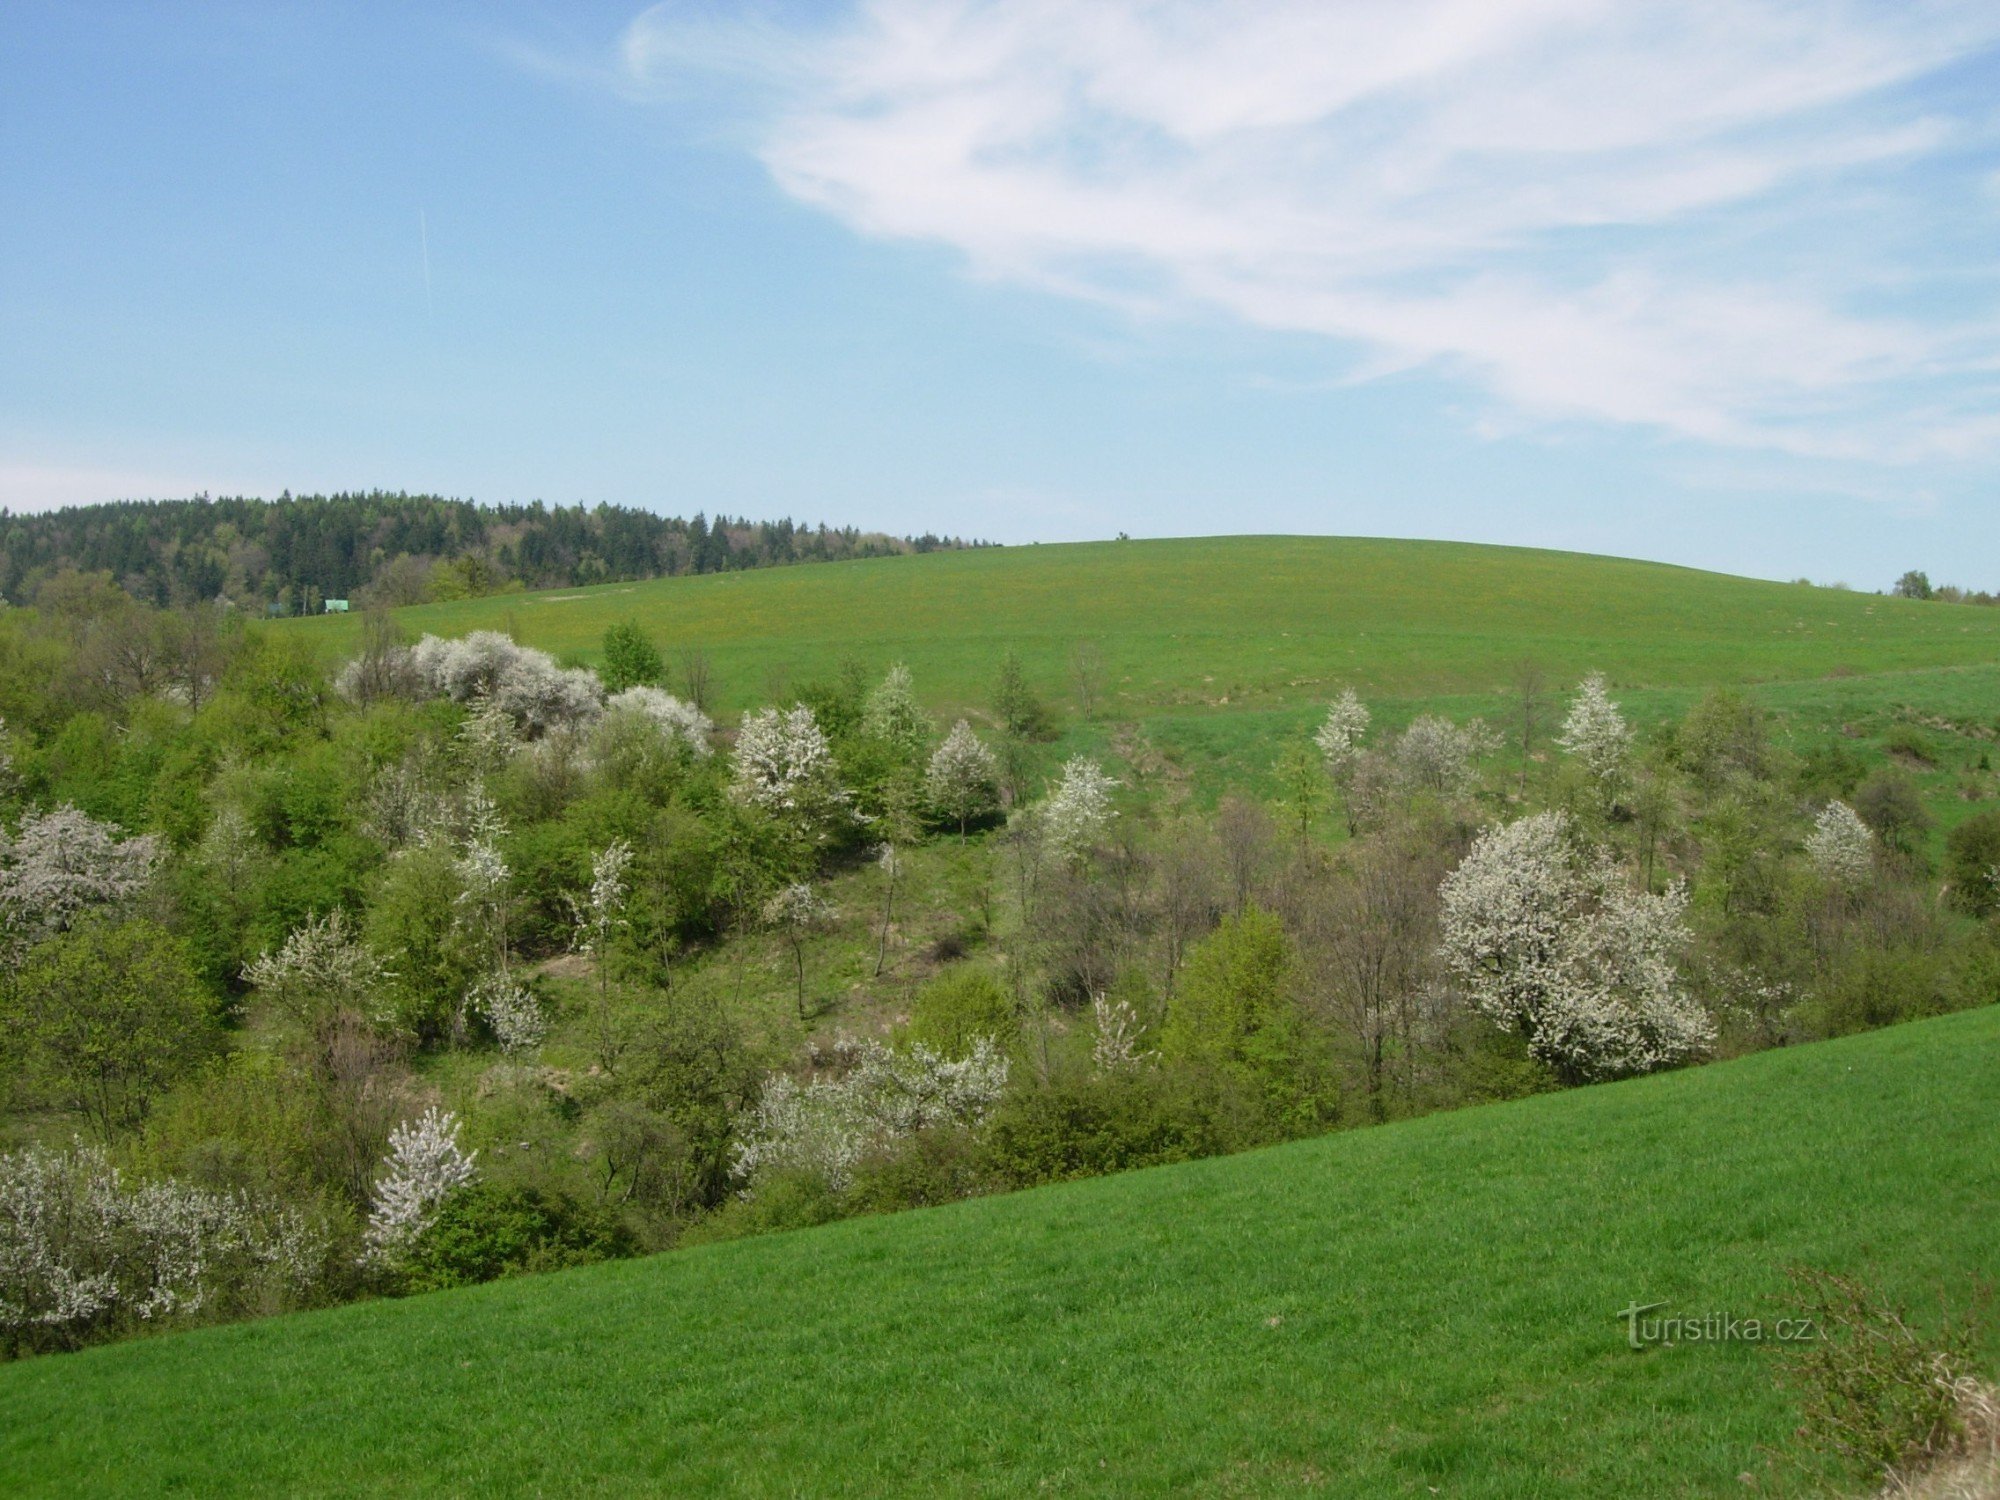 Vlčková と Držková の間の牧草地